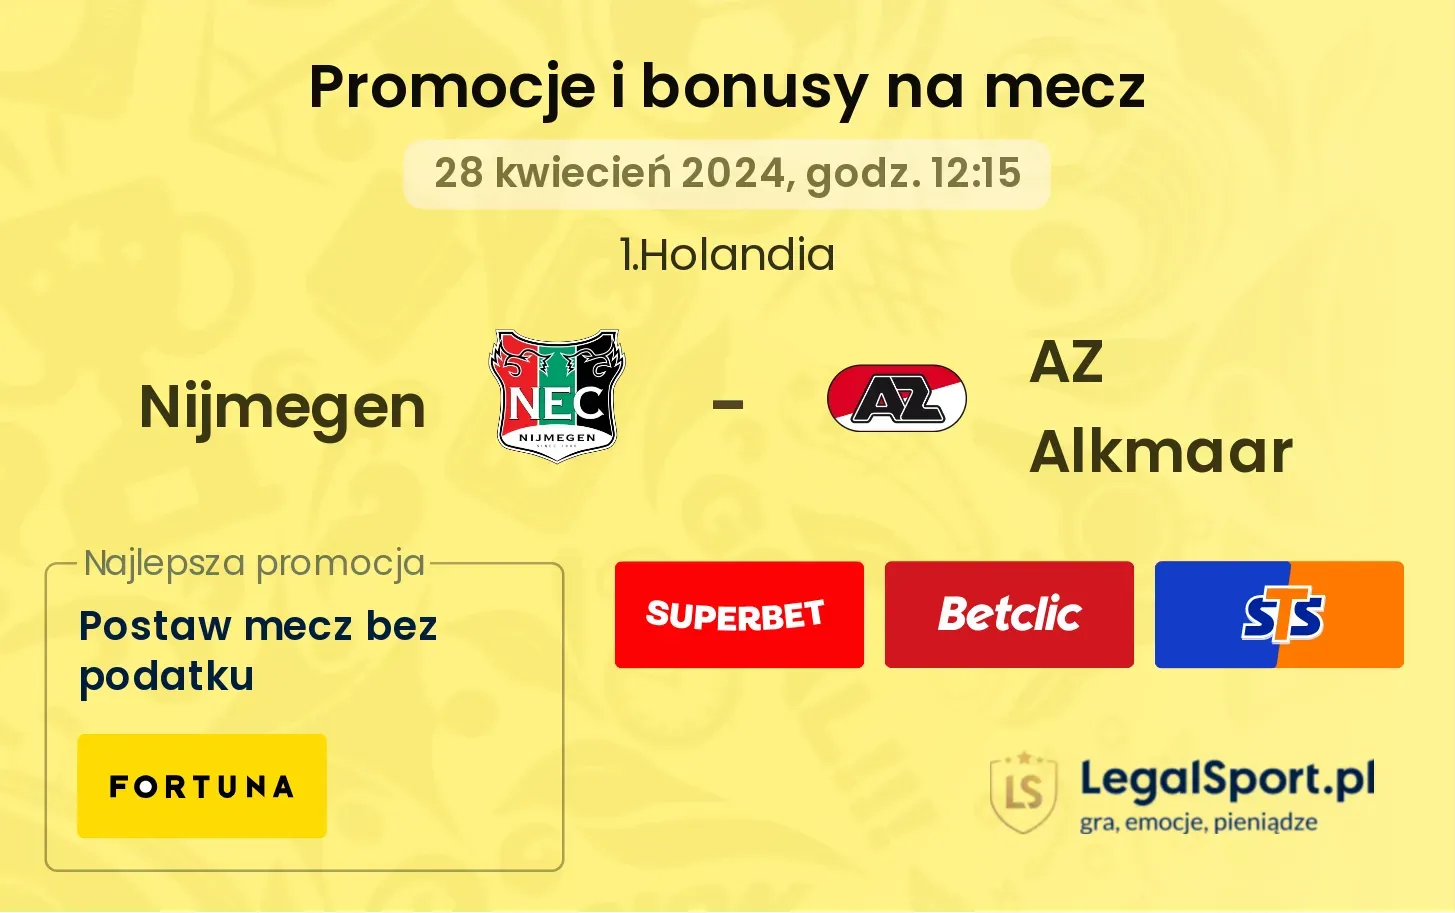 Nijmegen - AZ Alkmaar promocje bonusy na mecz